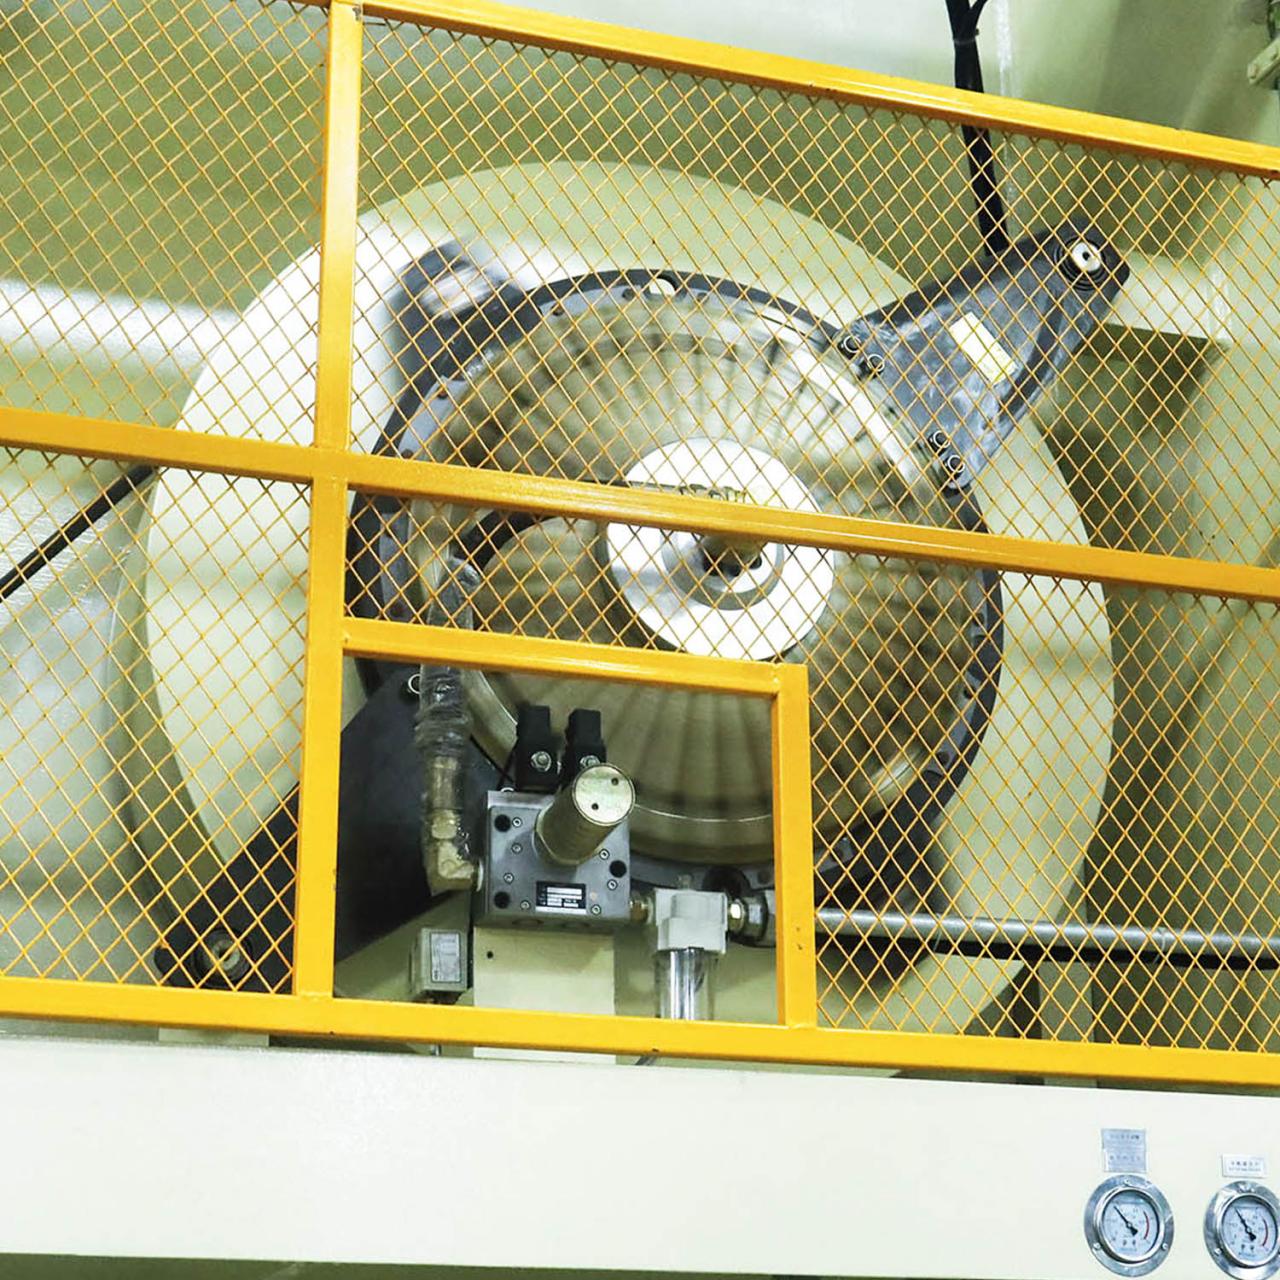 Punzonadora CNC de 80 toneladas Prezo Prensa eléctrica de marco C Máquina de prensa hidráulica pequena